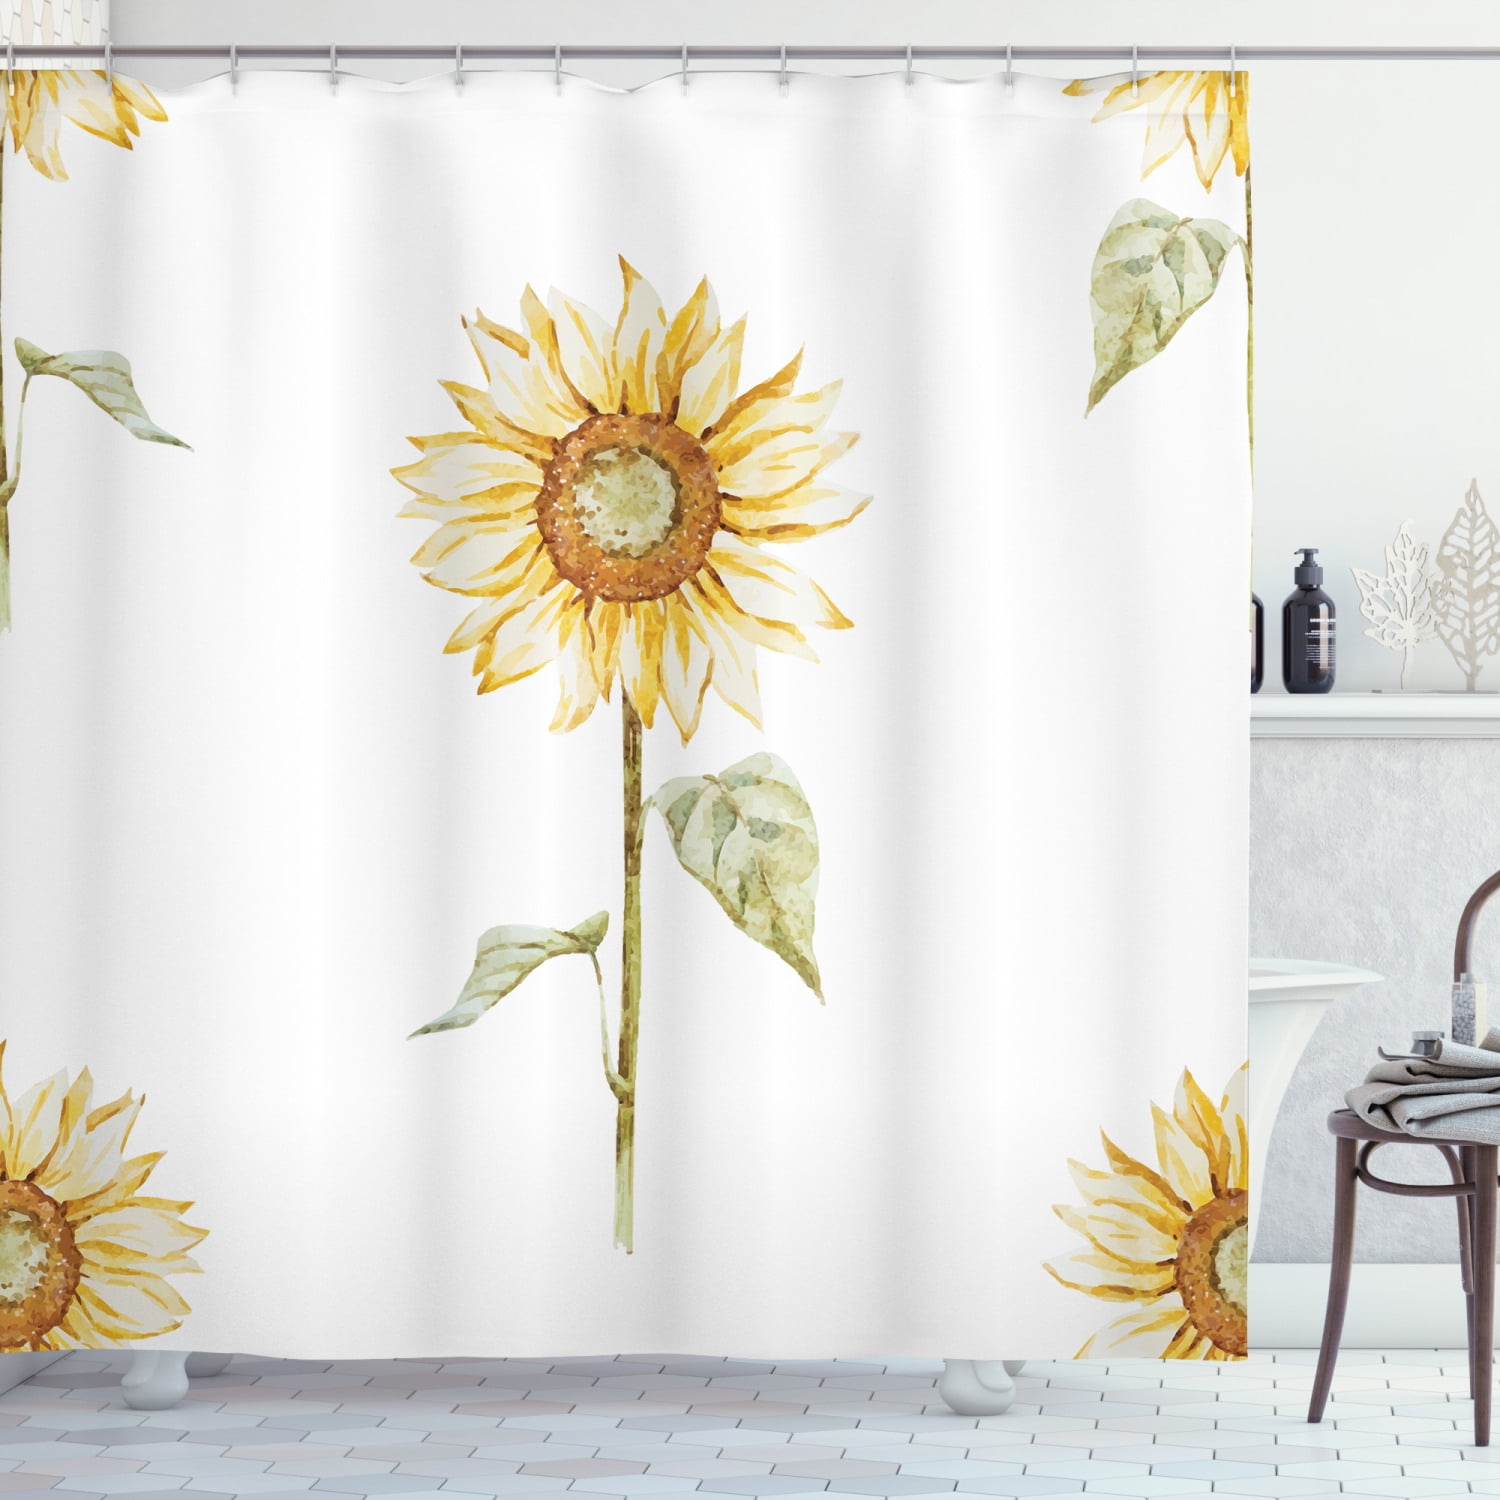 Art Sunflower Pattern Shower Curtain Bathroom Waterproof Curtain Decor with Hook 